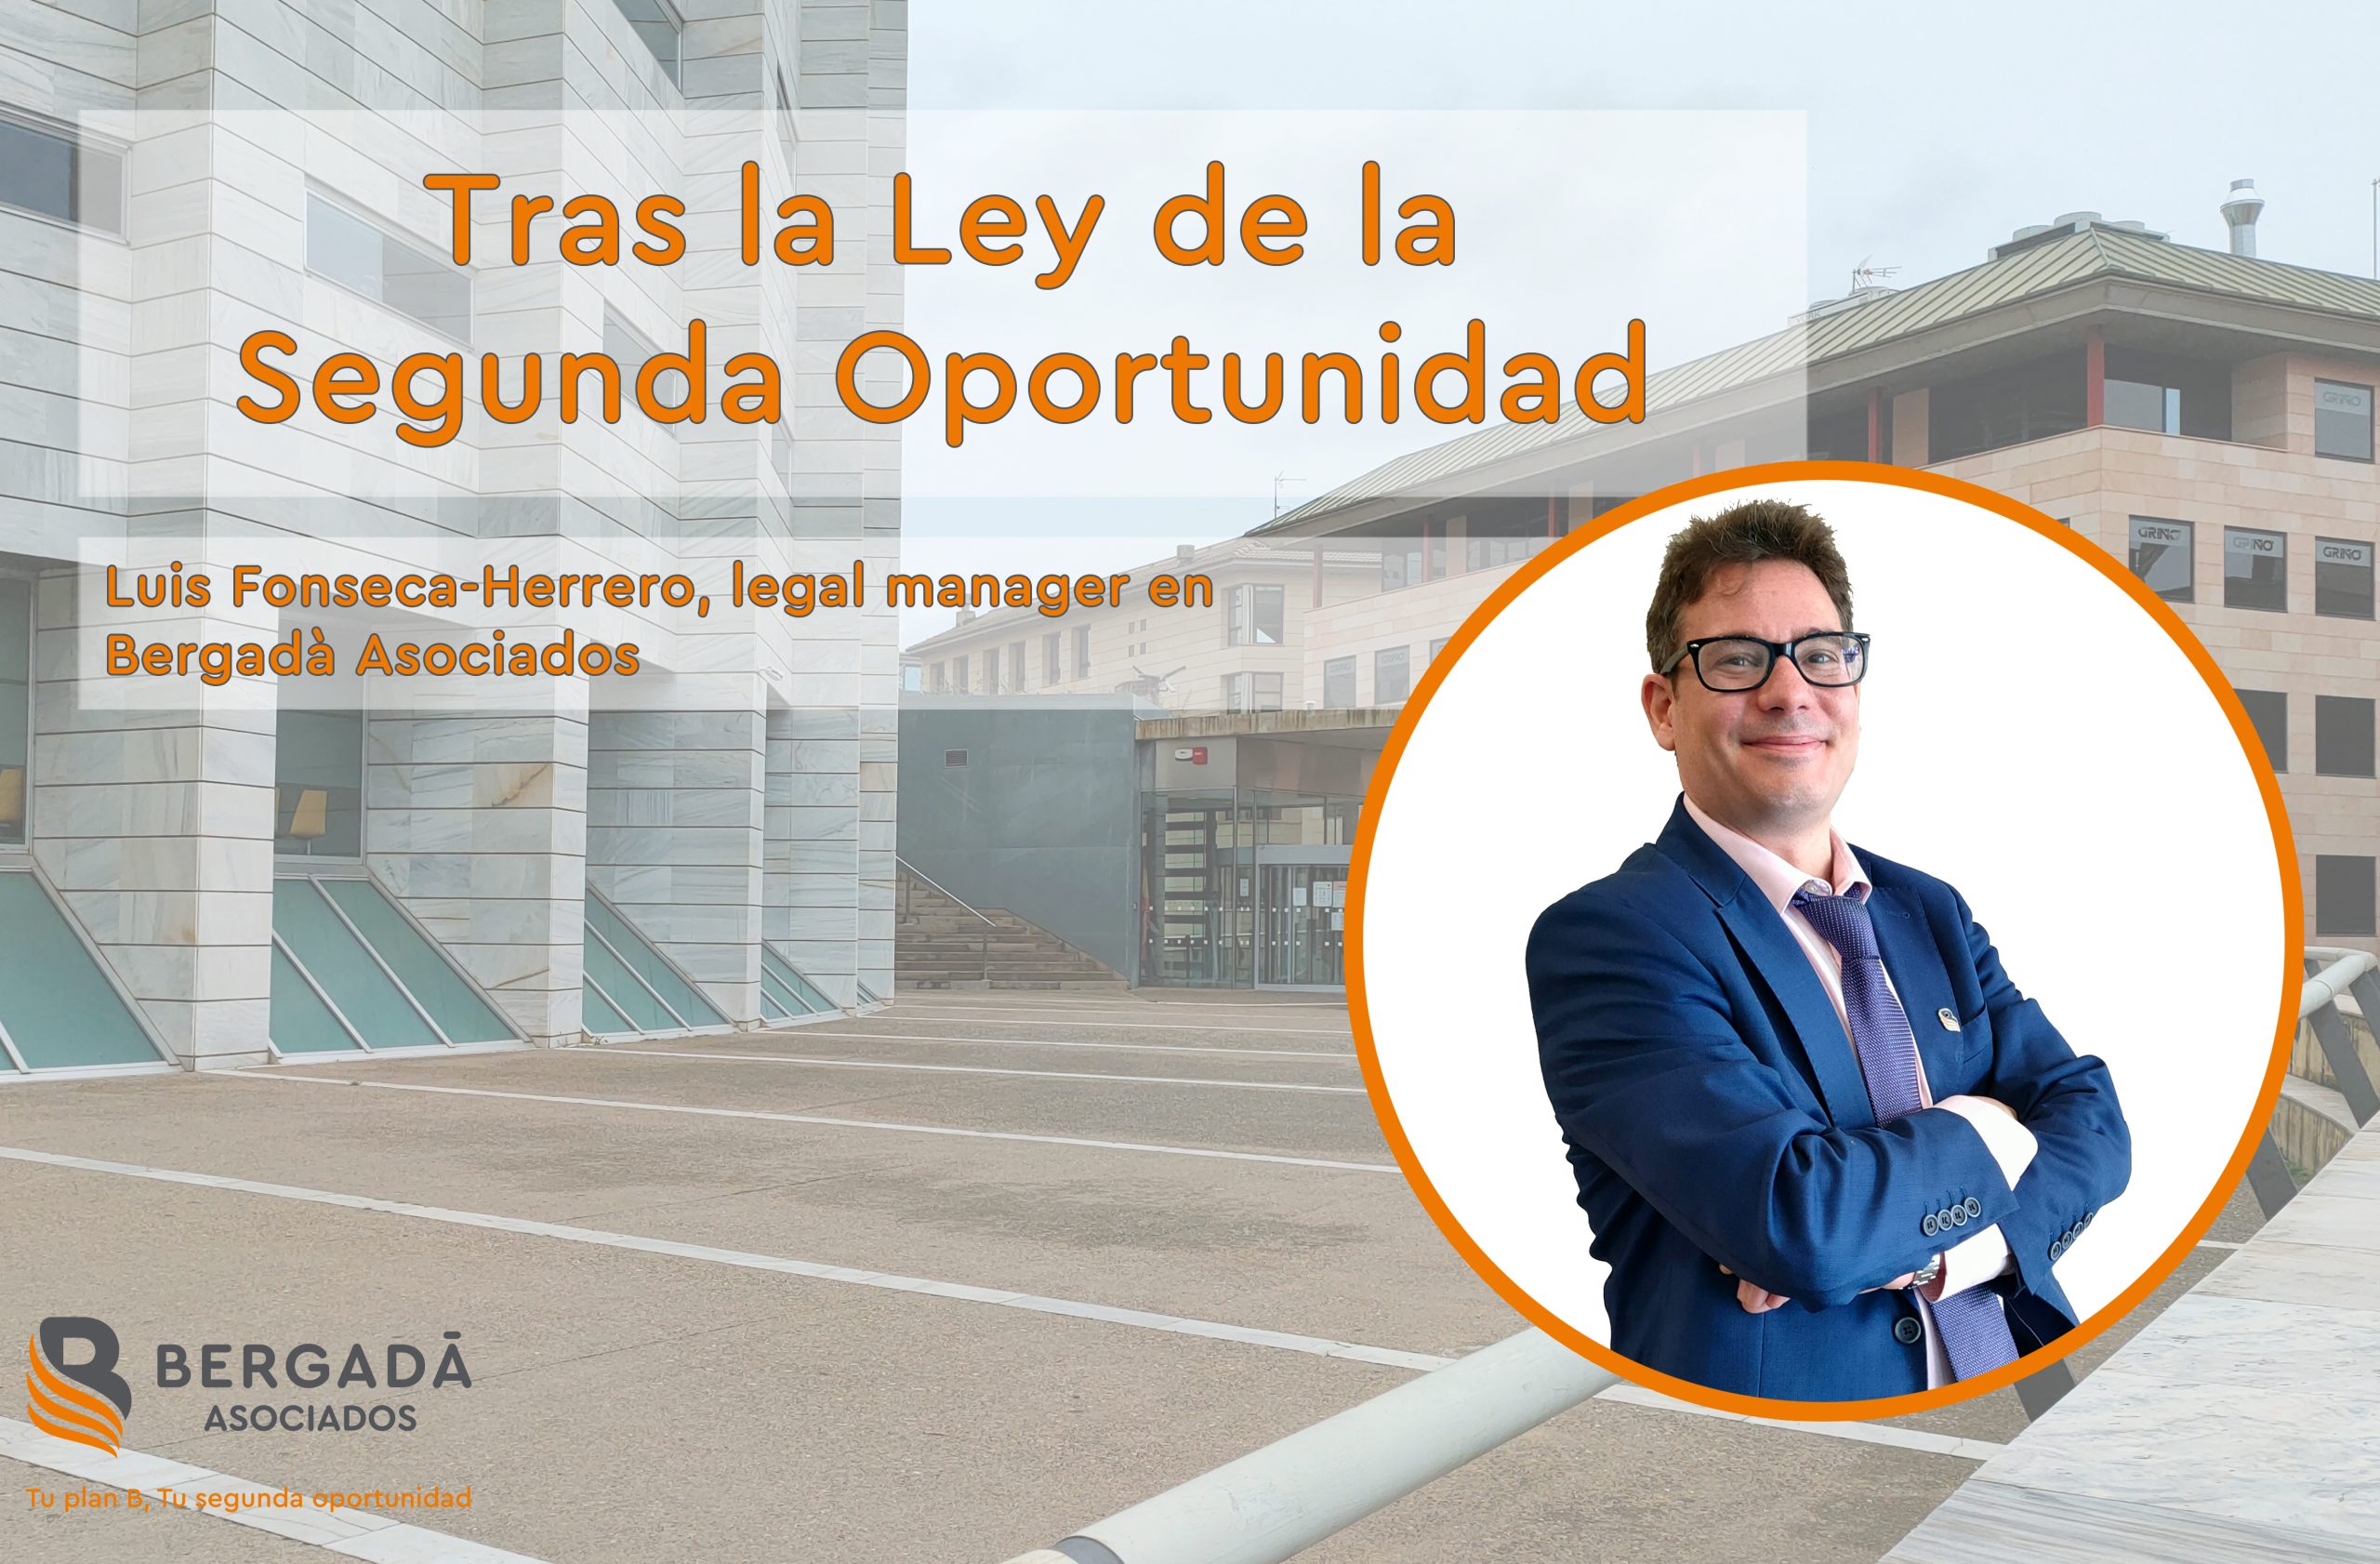 Entrevista a Luis Fonseca-Herrero legal manager de Bergadà Asociados